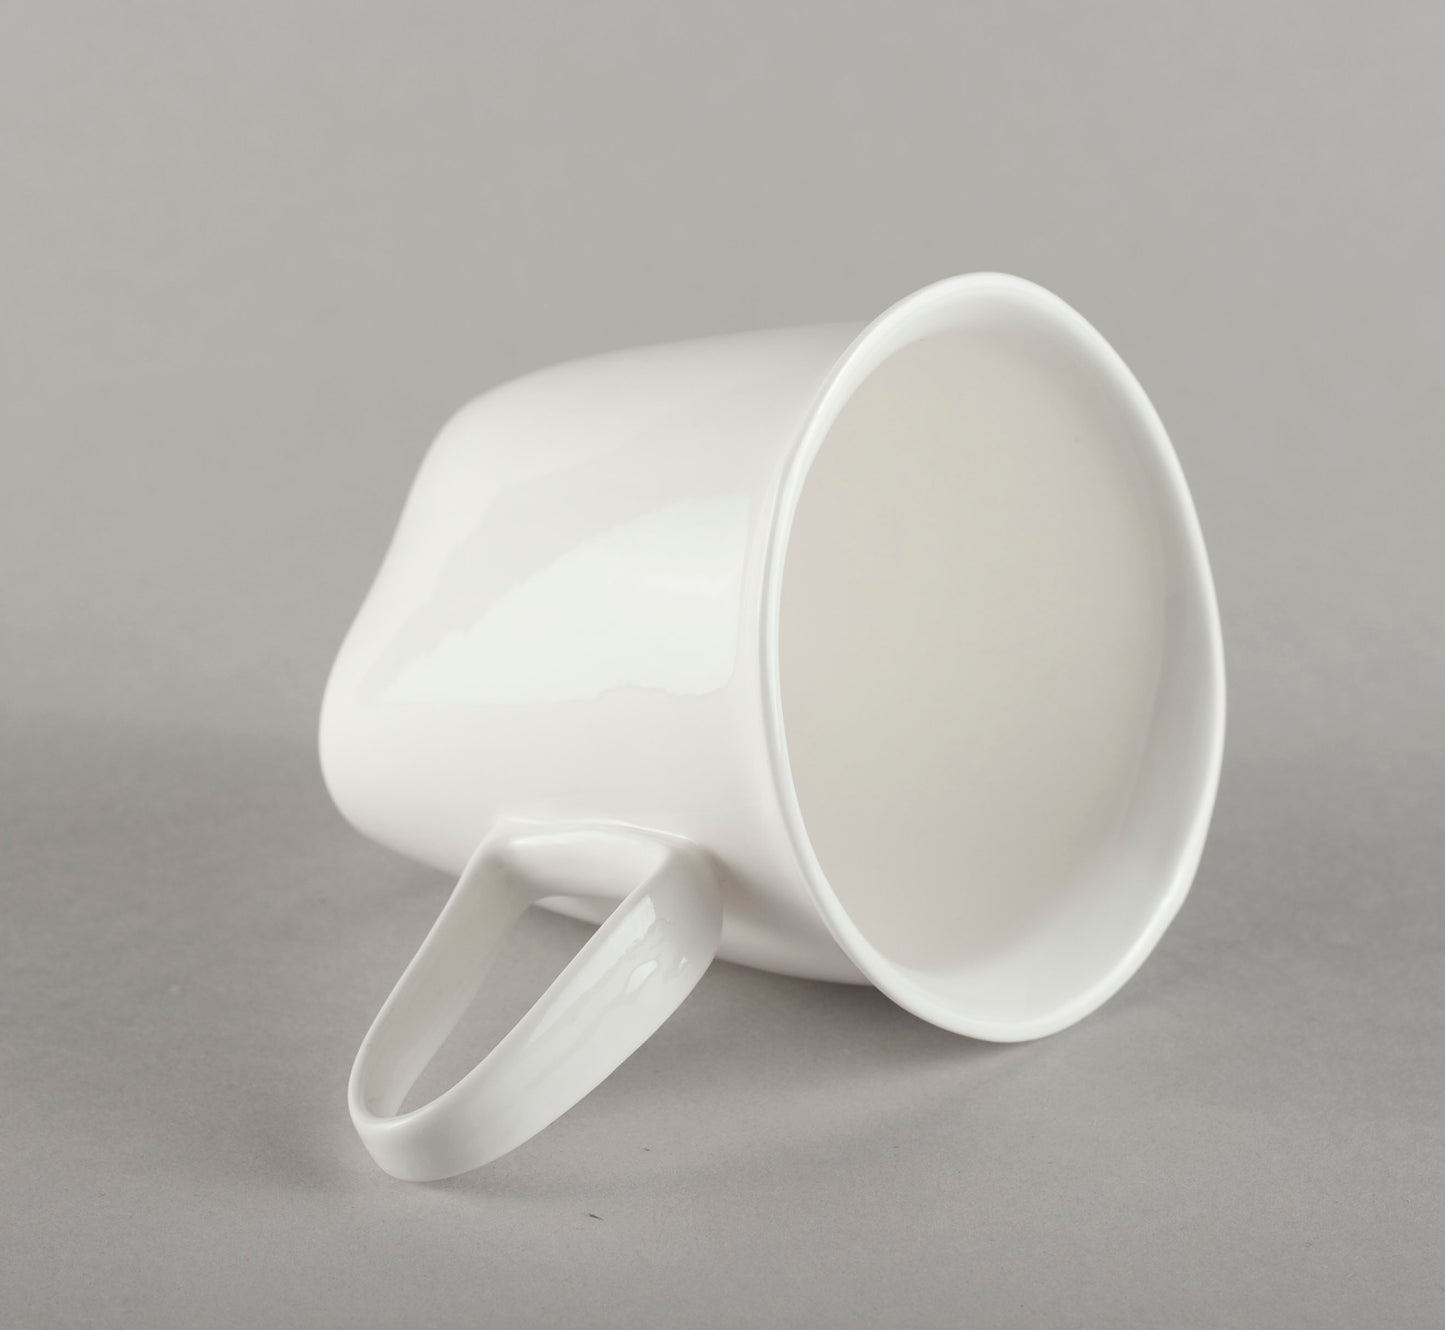 Porcelain Mug Lilly 1